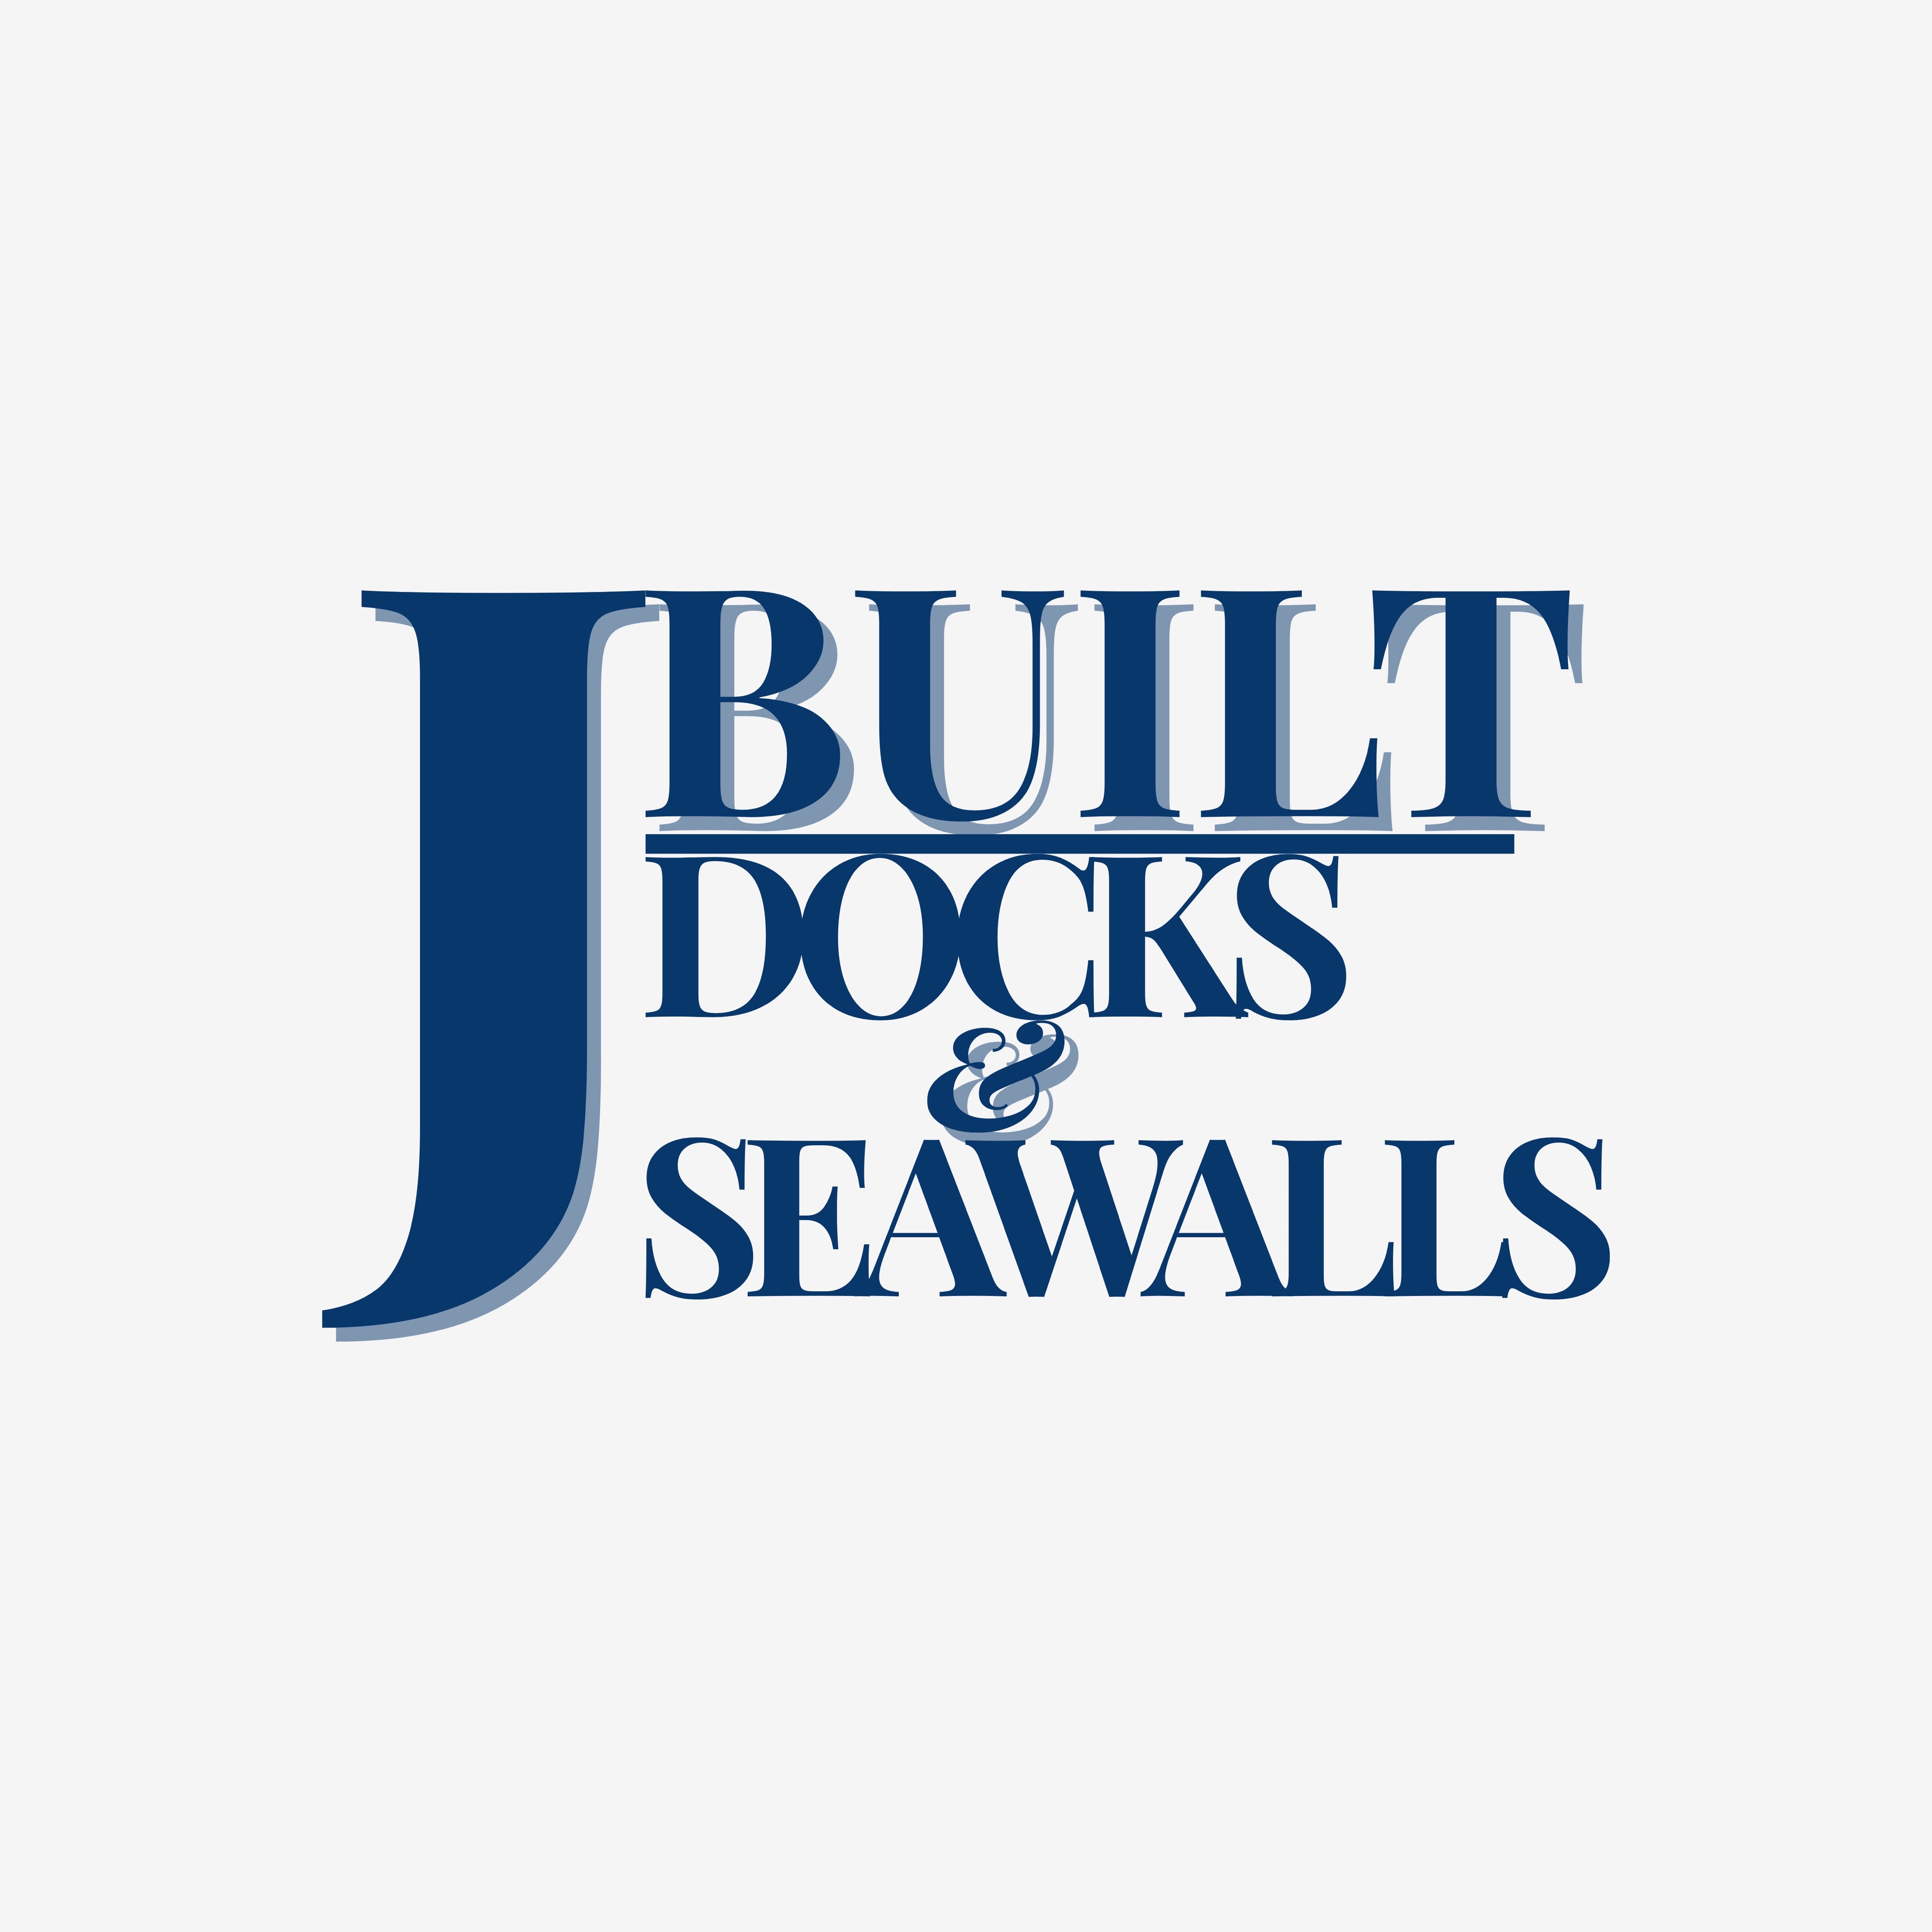 J Built Docks & Seawalls